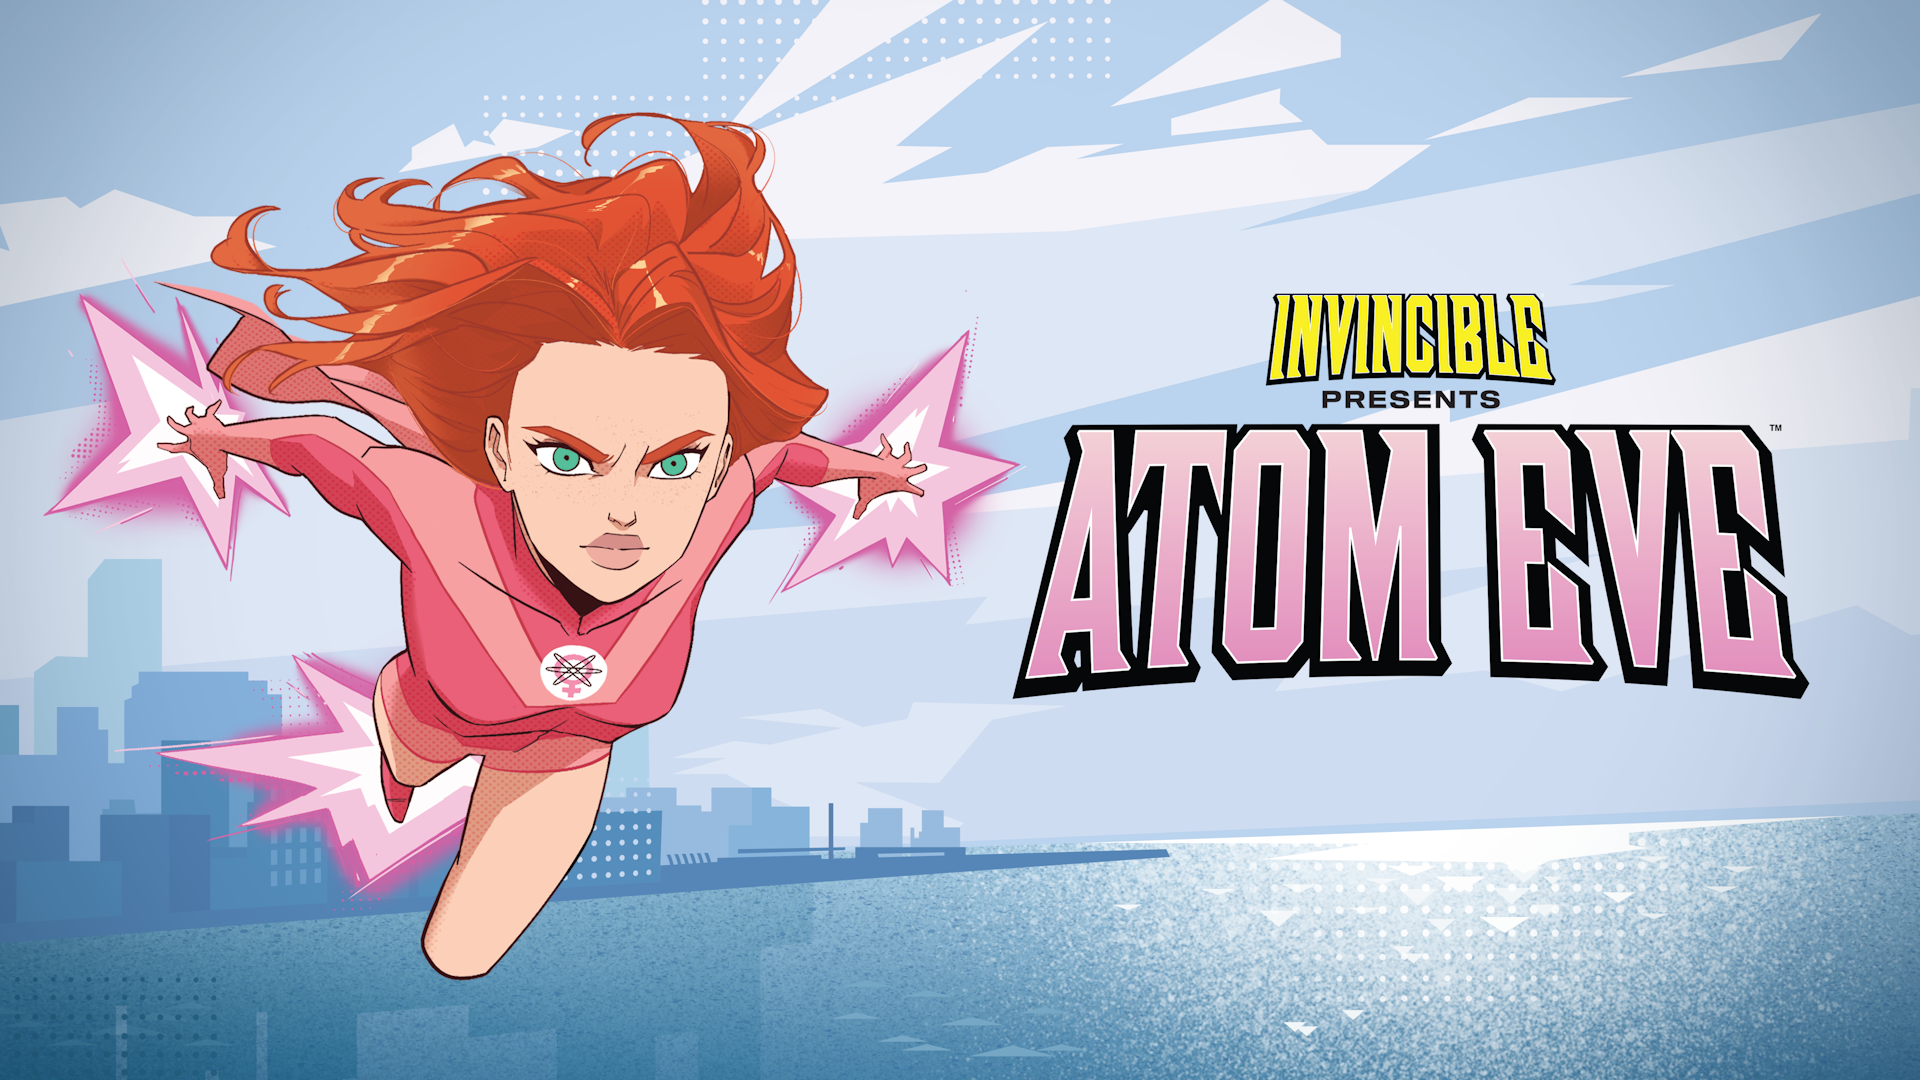 Arte clave del videojuego Invincible Presents: Atom Eve